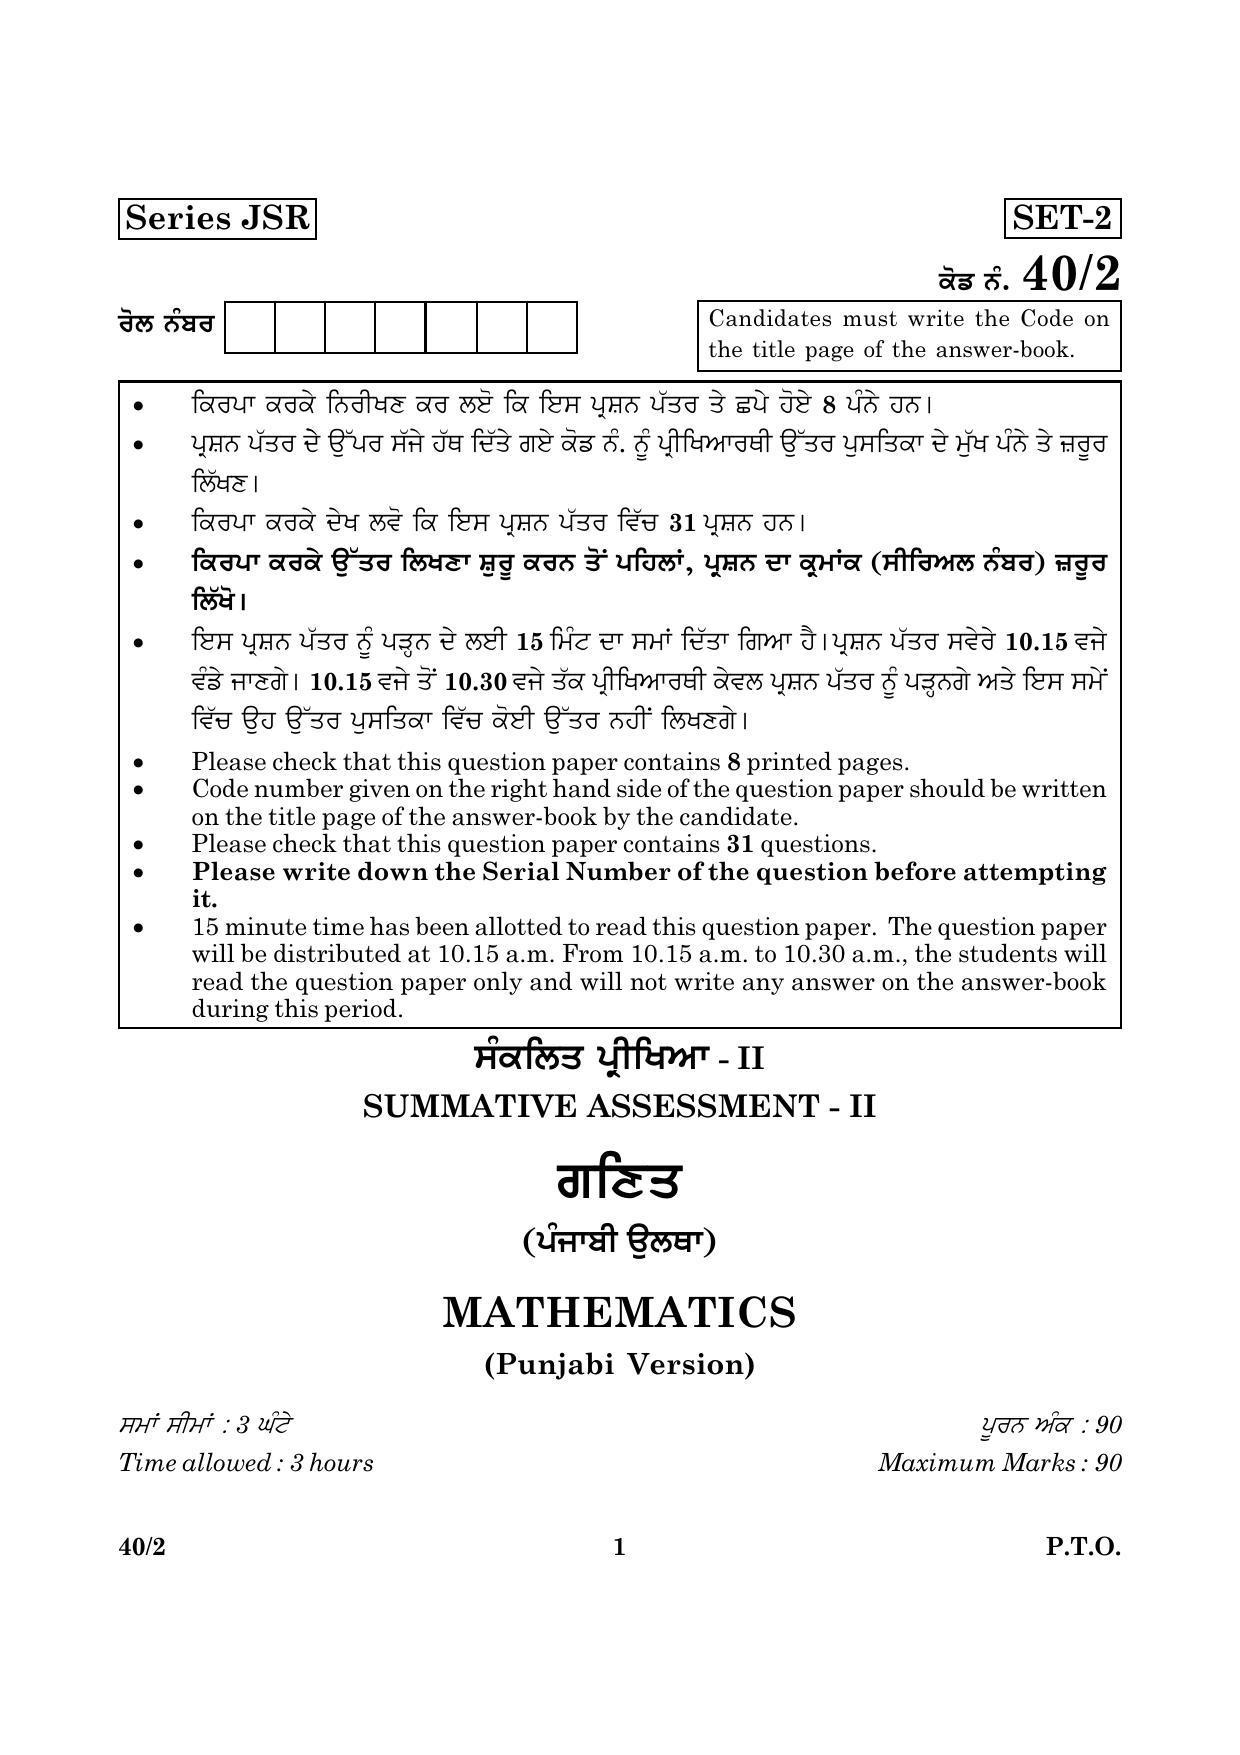 CBSE Class 10 040 Mathematics Punjabi 2 2016 Question Paper - Page 1